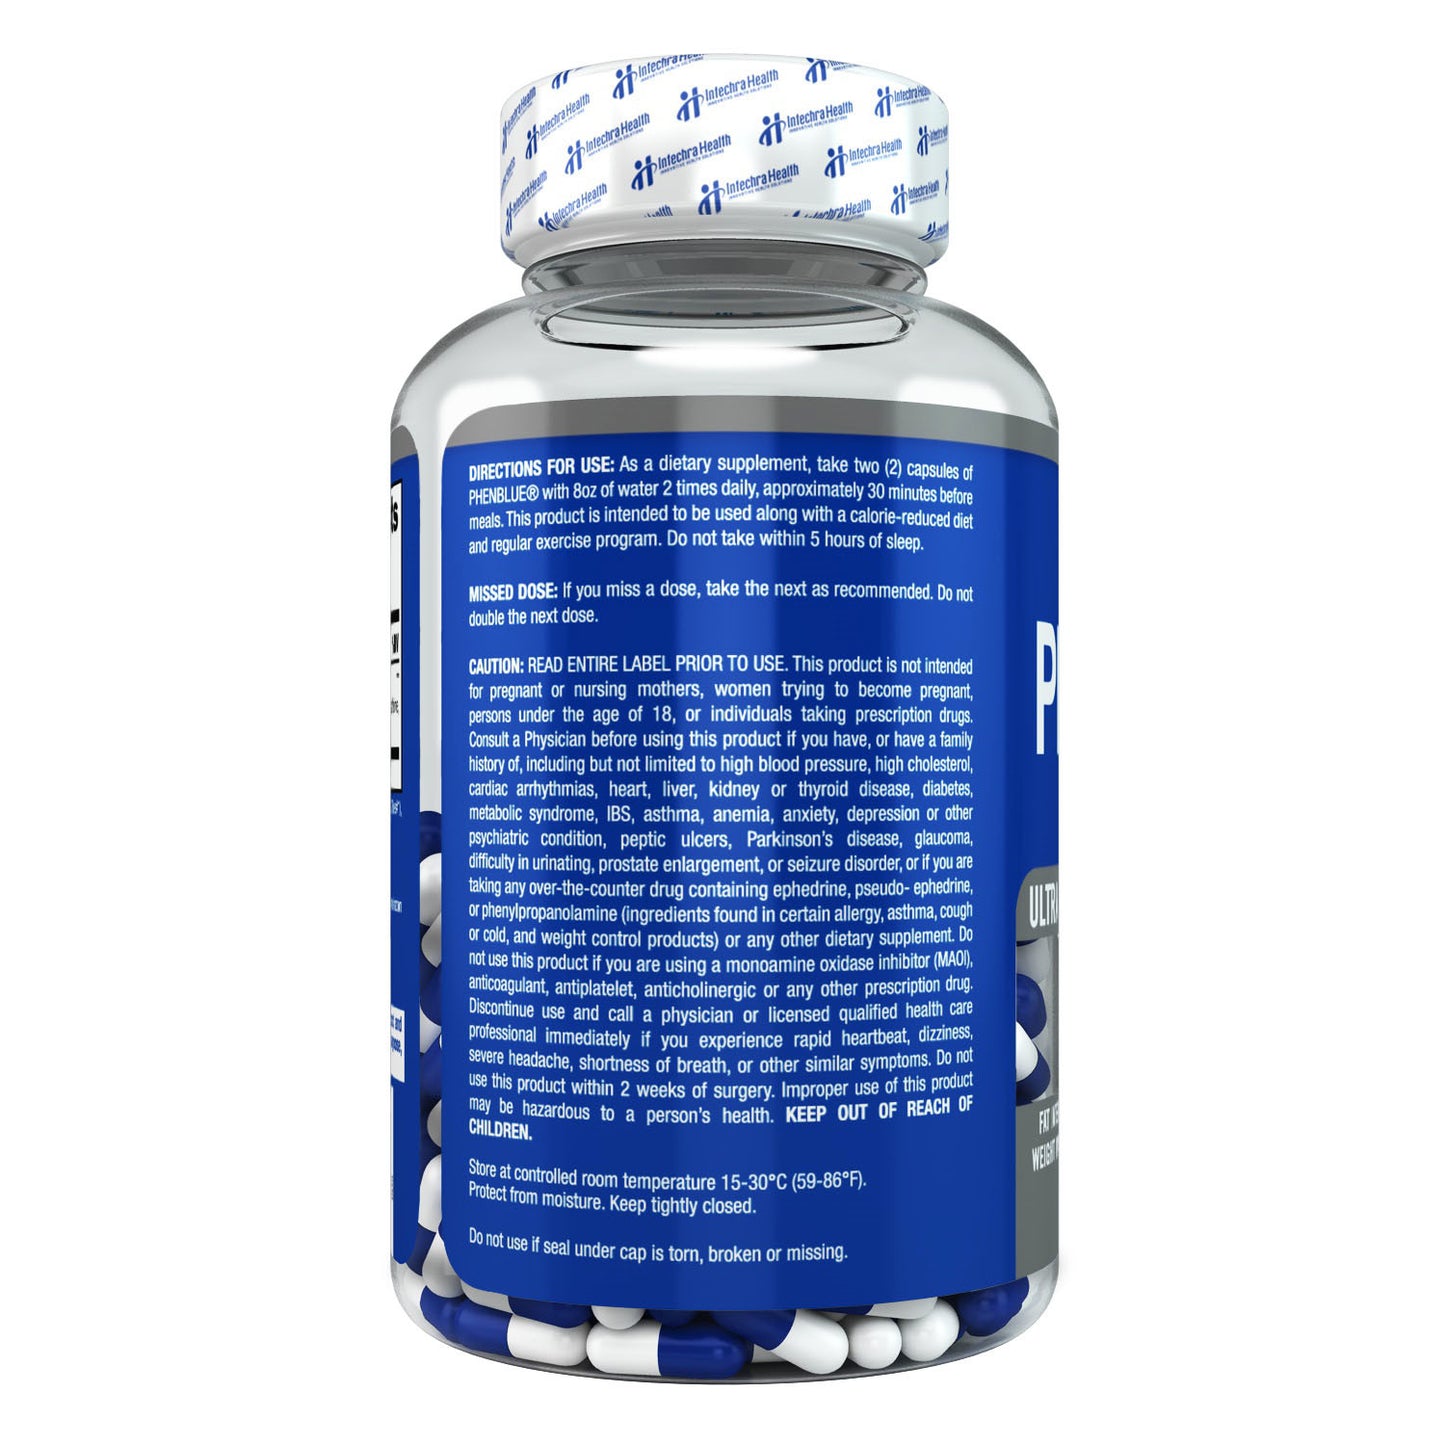 PHENBLUE Diet Pills - Fat Fighting Formula - 120 Capsules